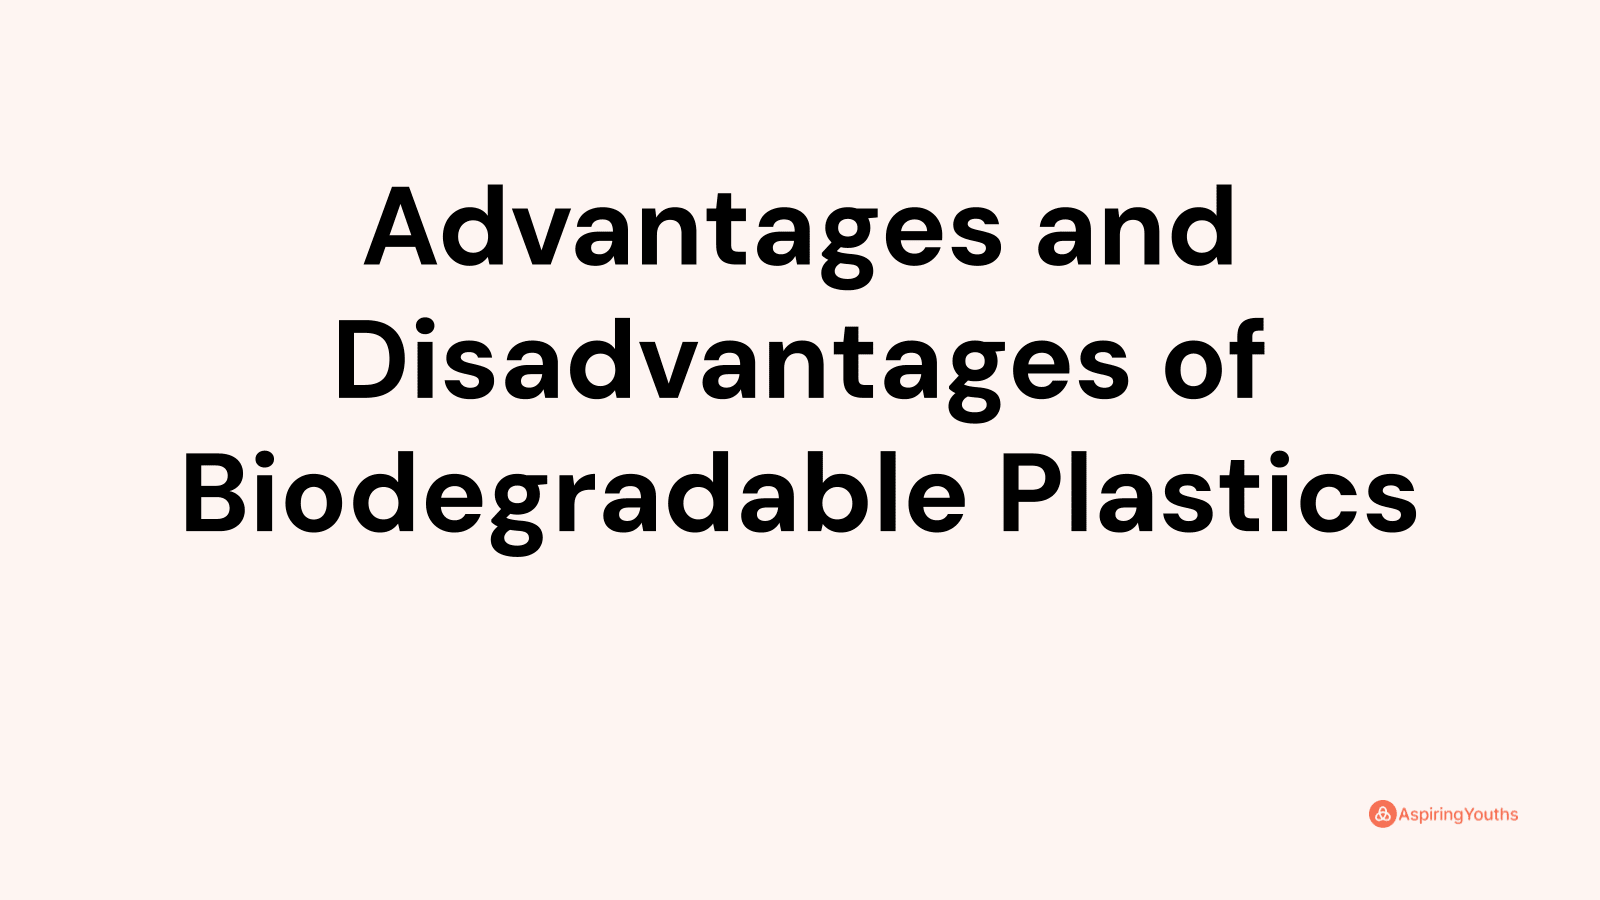 Advantages and disadvantages of Biodegradable Plastics